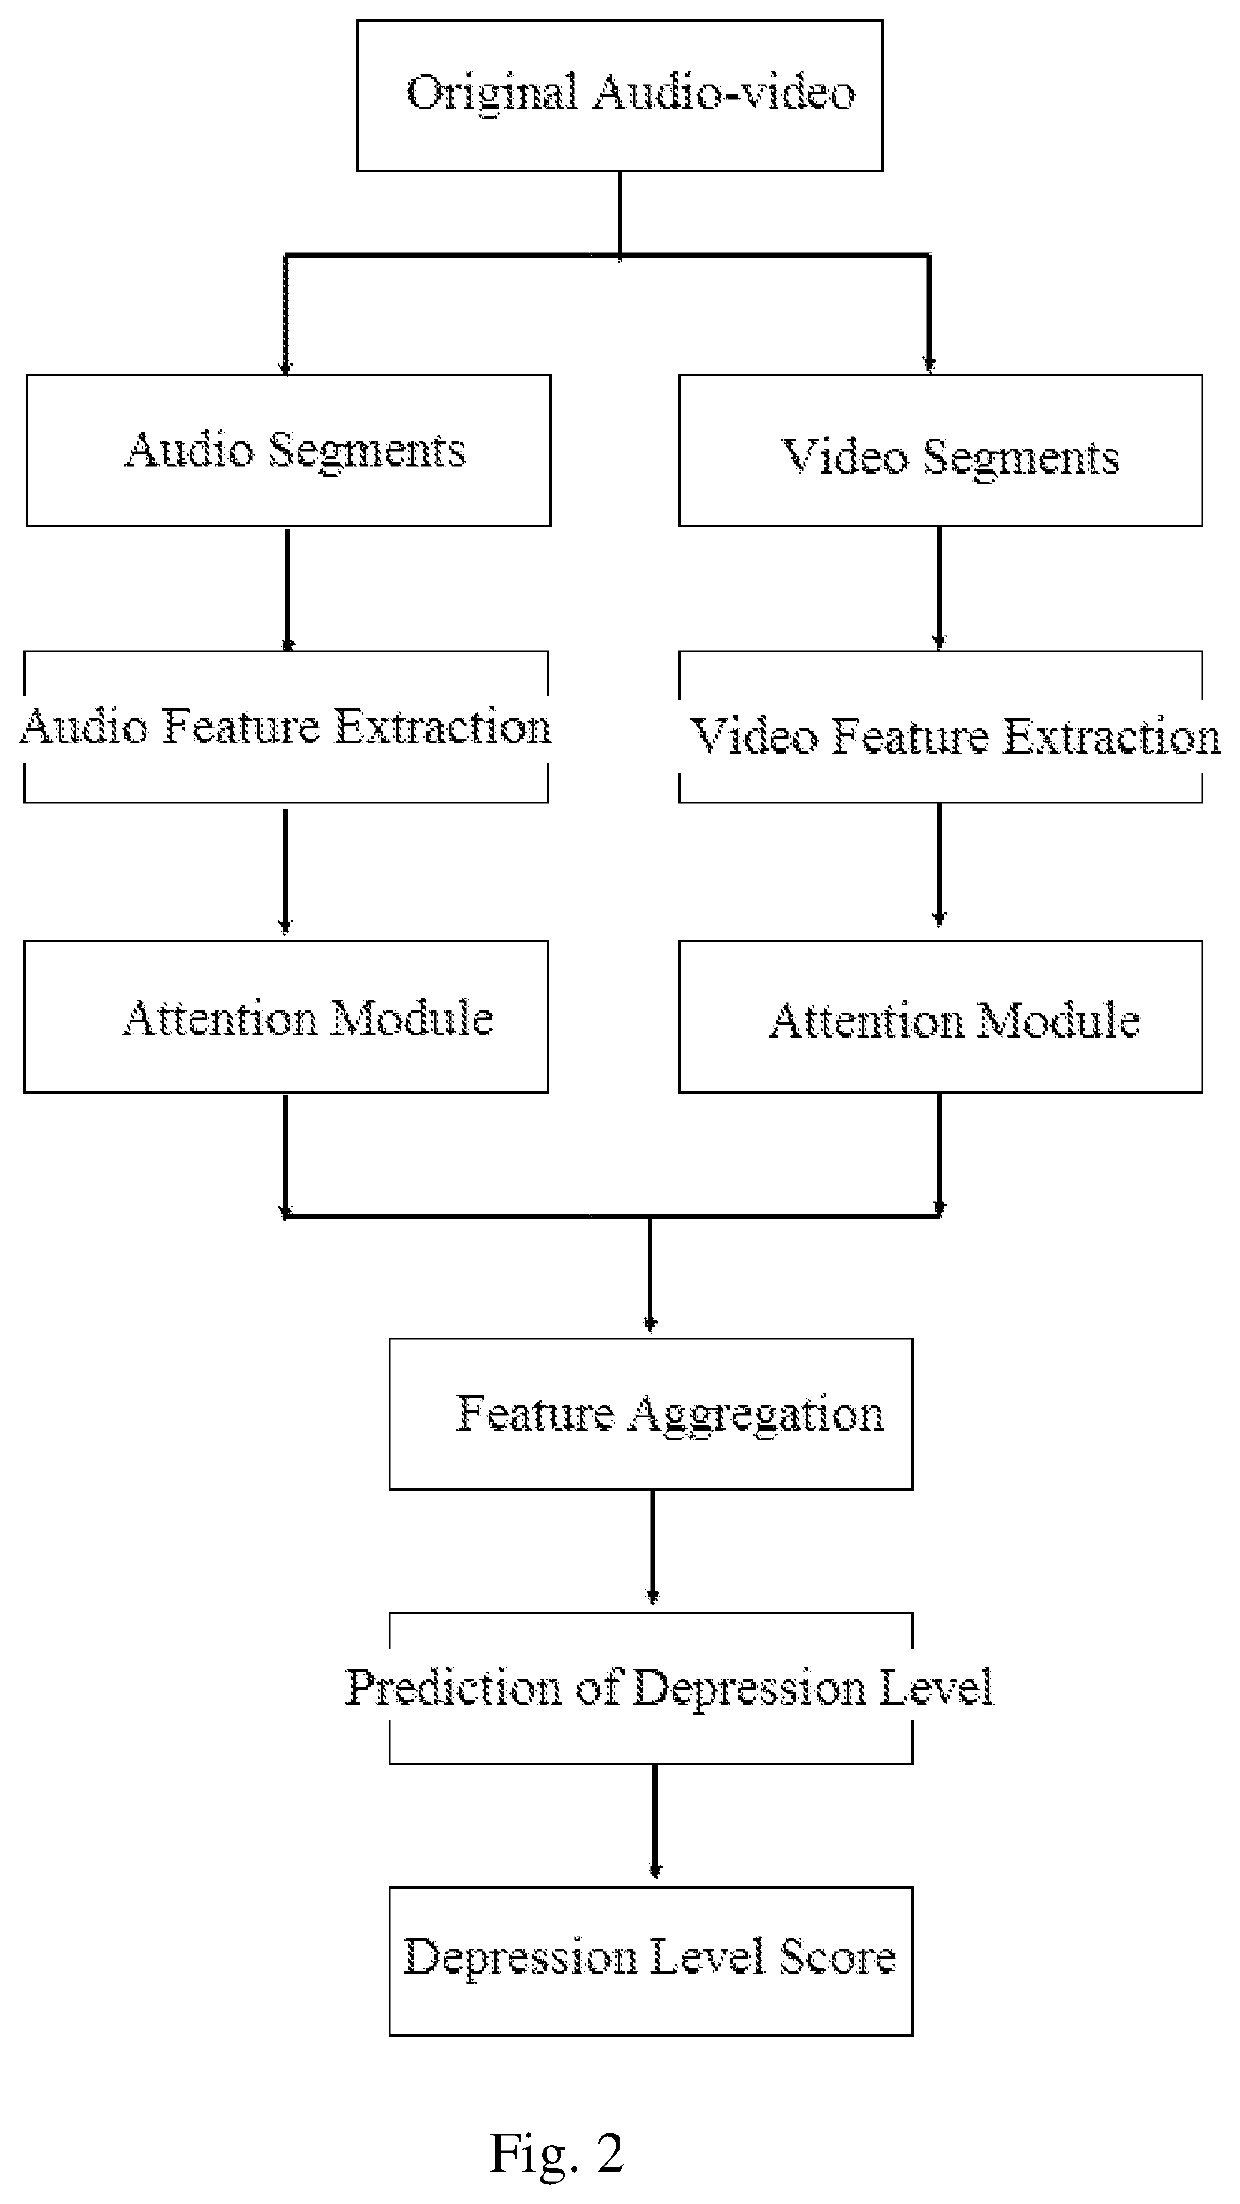 Automatic depression detection method based on audio-video